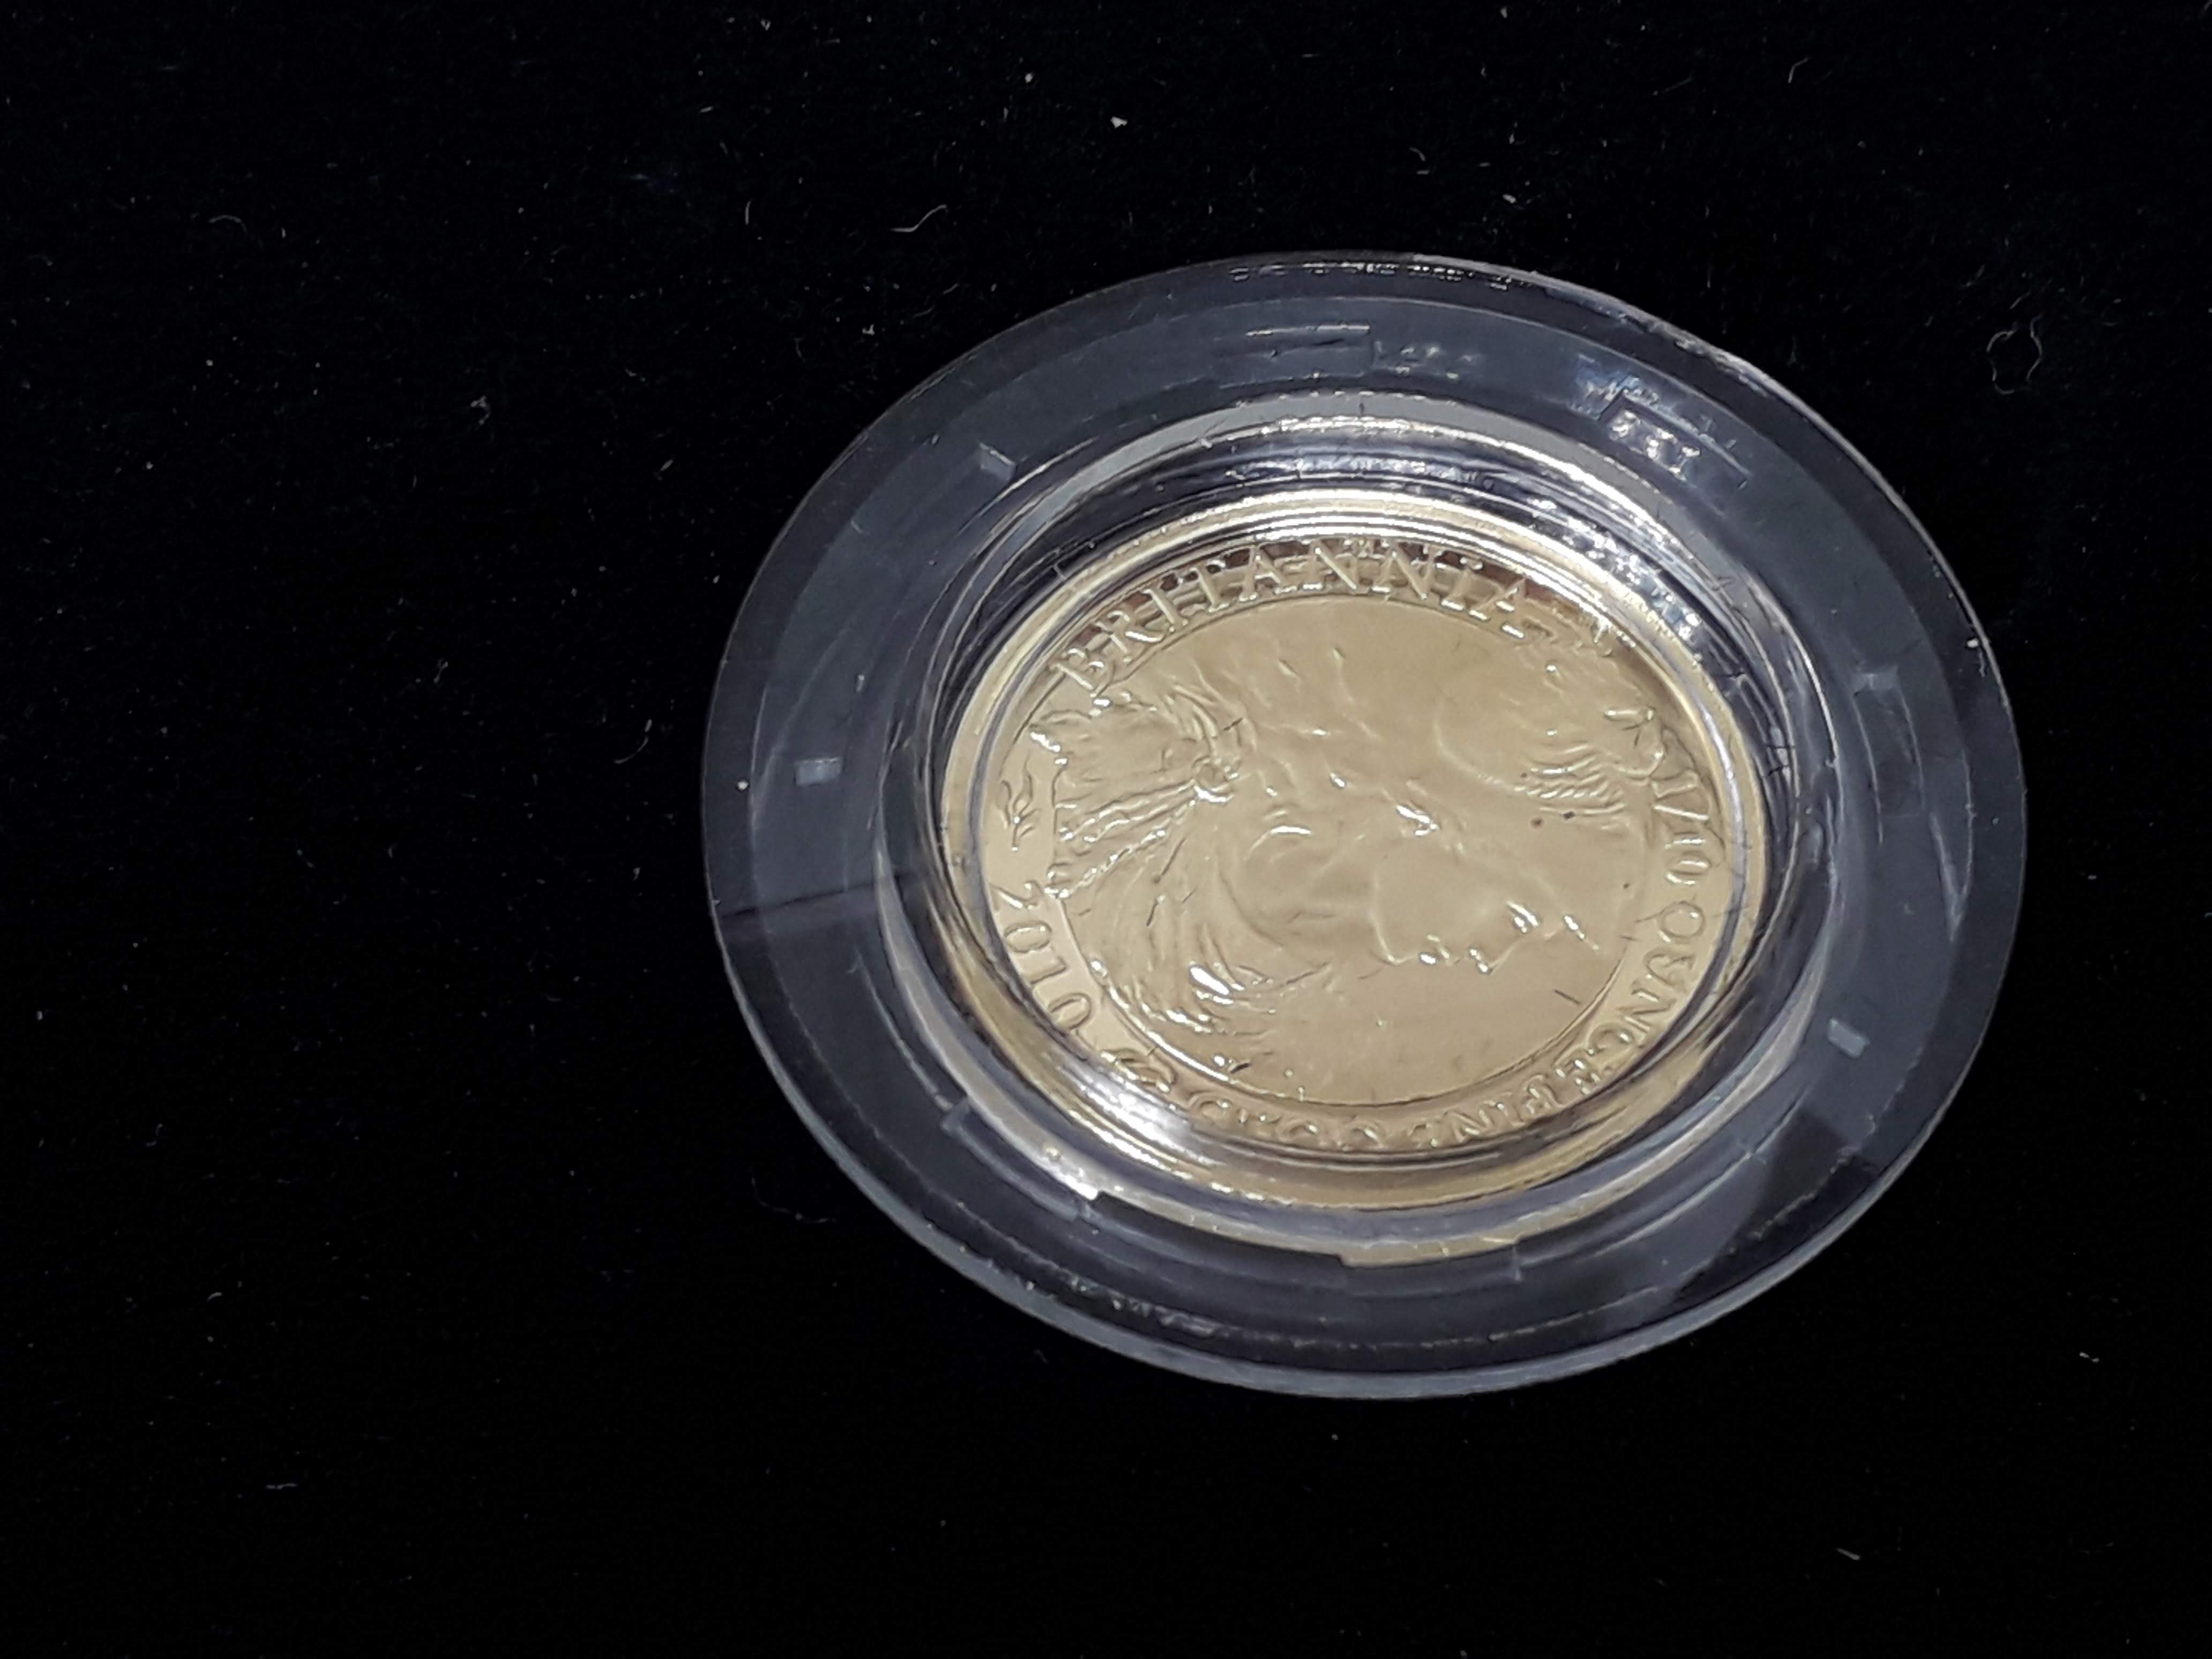 Elizabeth II Royal Mint 2010 Britannia Three Coin Gold Proof Set comprising £10, £25 & £50, 0.9167 - Image 4 of 7